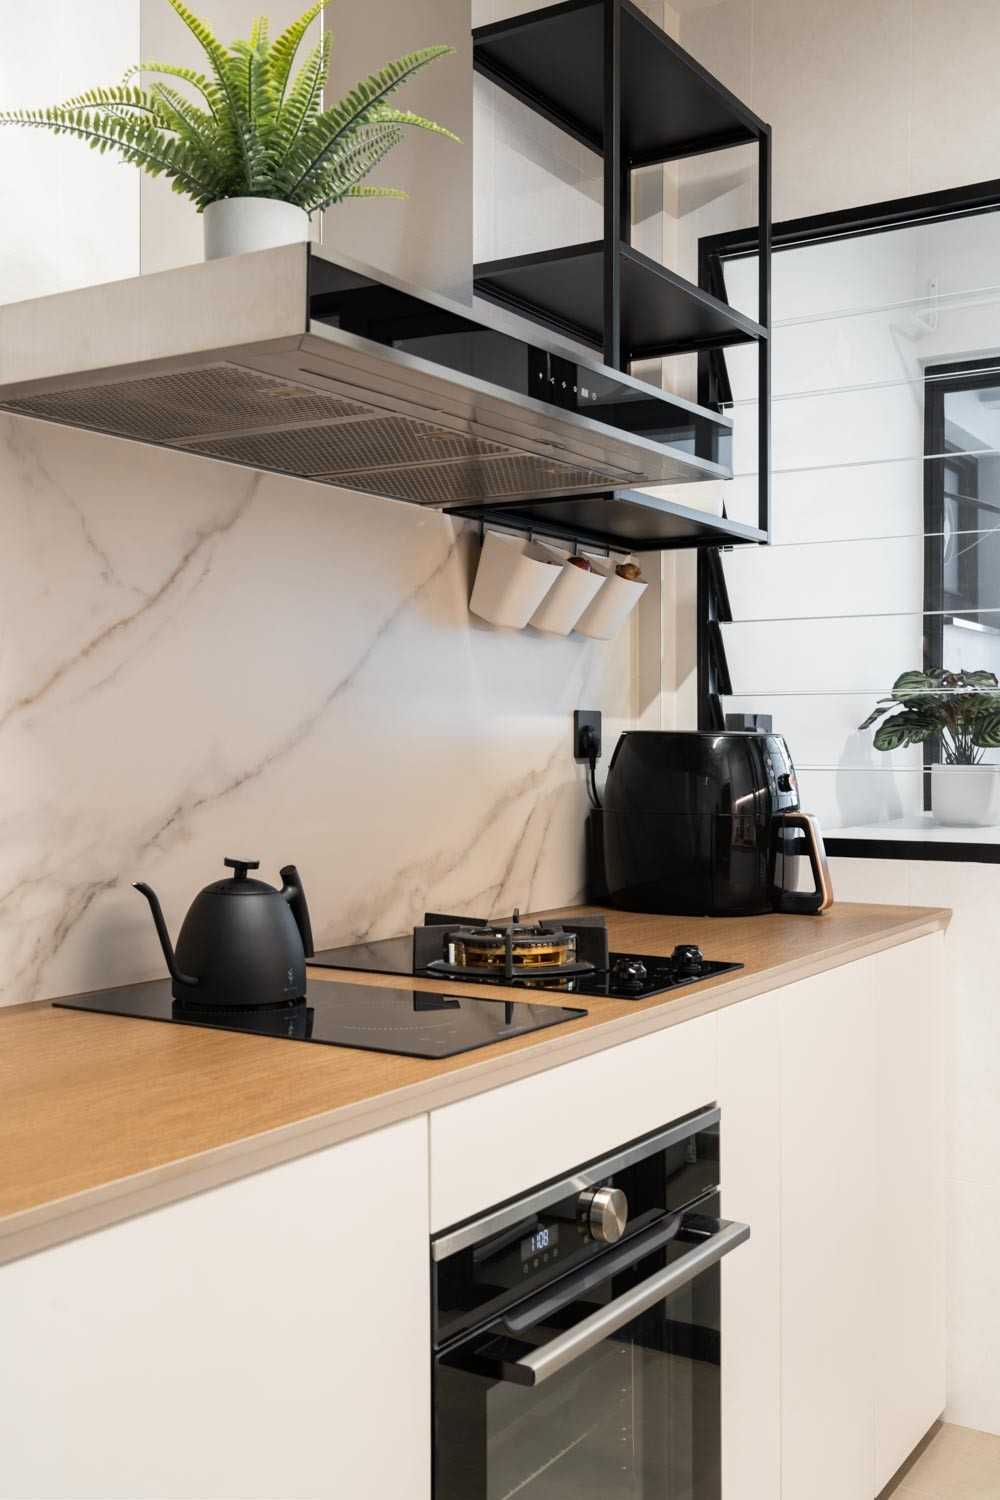 minimalist kitchen with homogeneous tiles and kitchen window